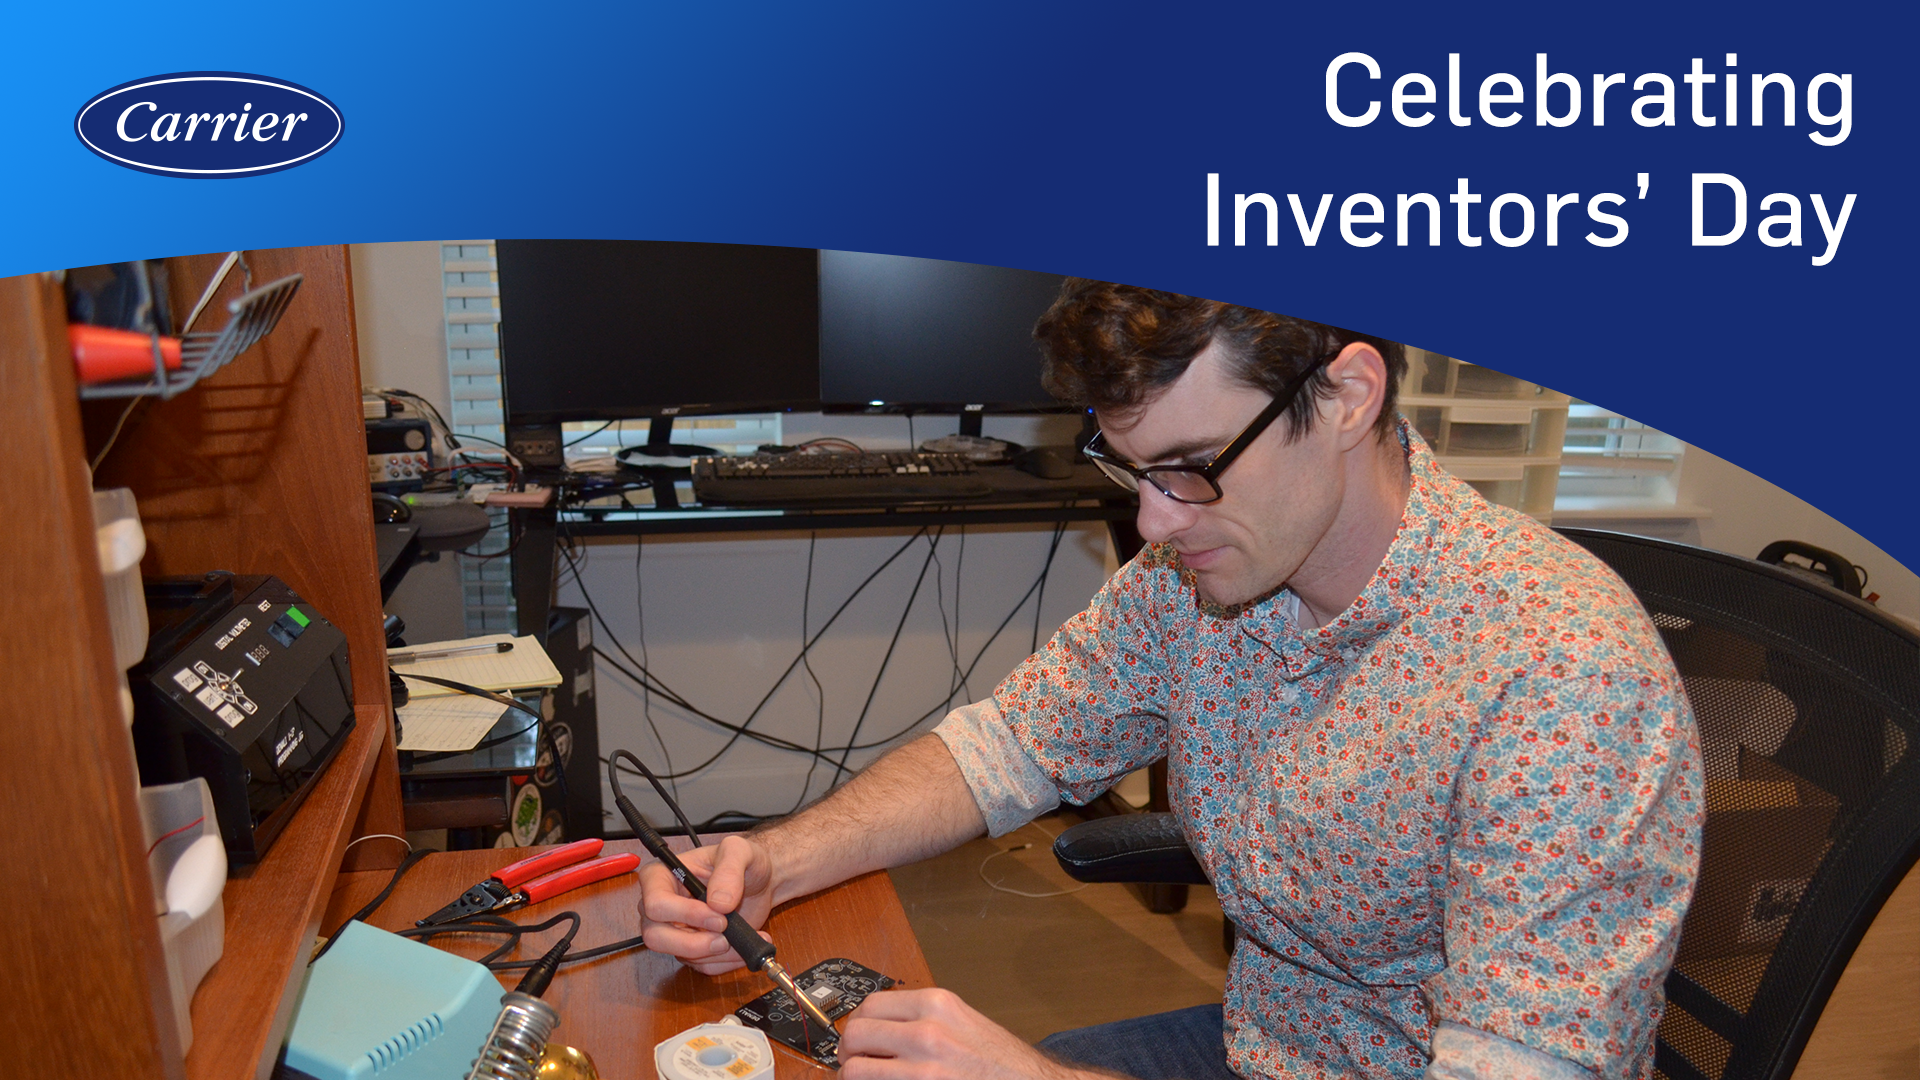 Inventors Day